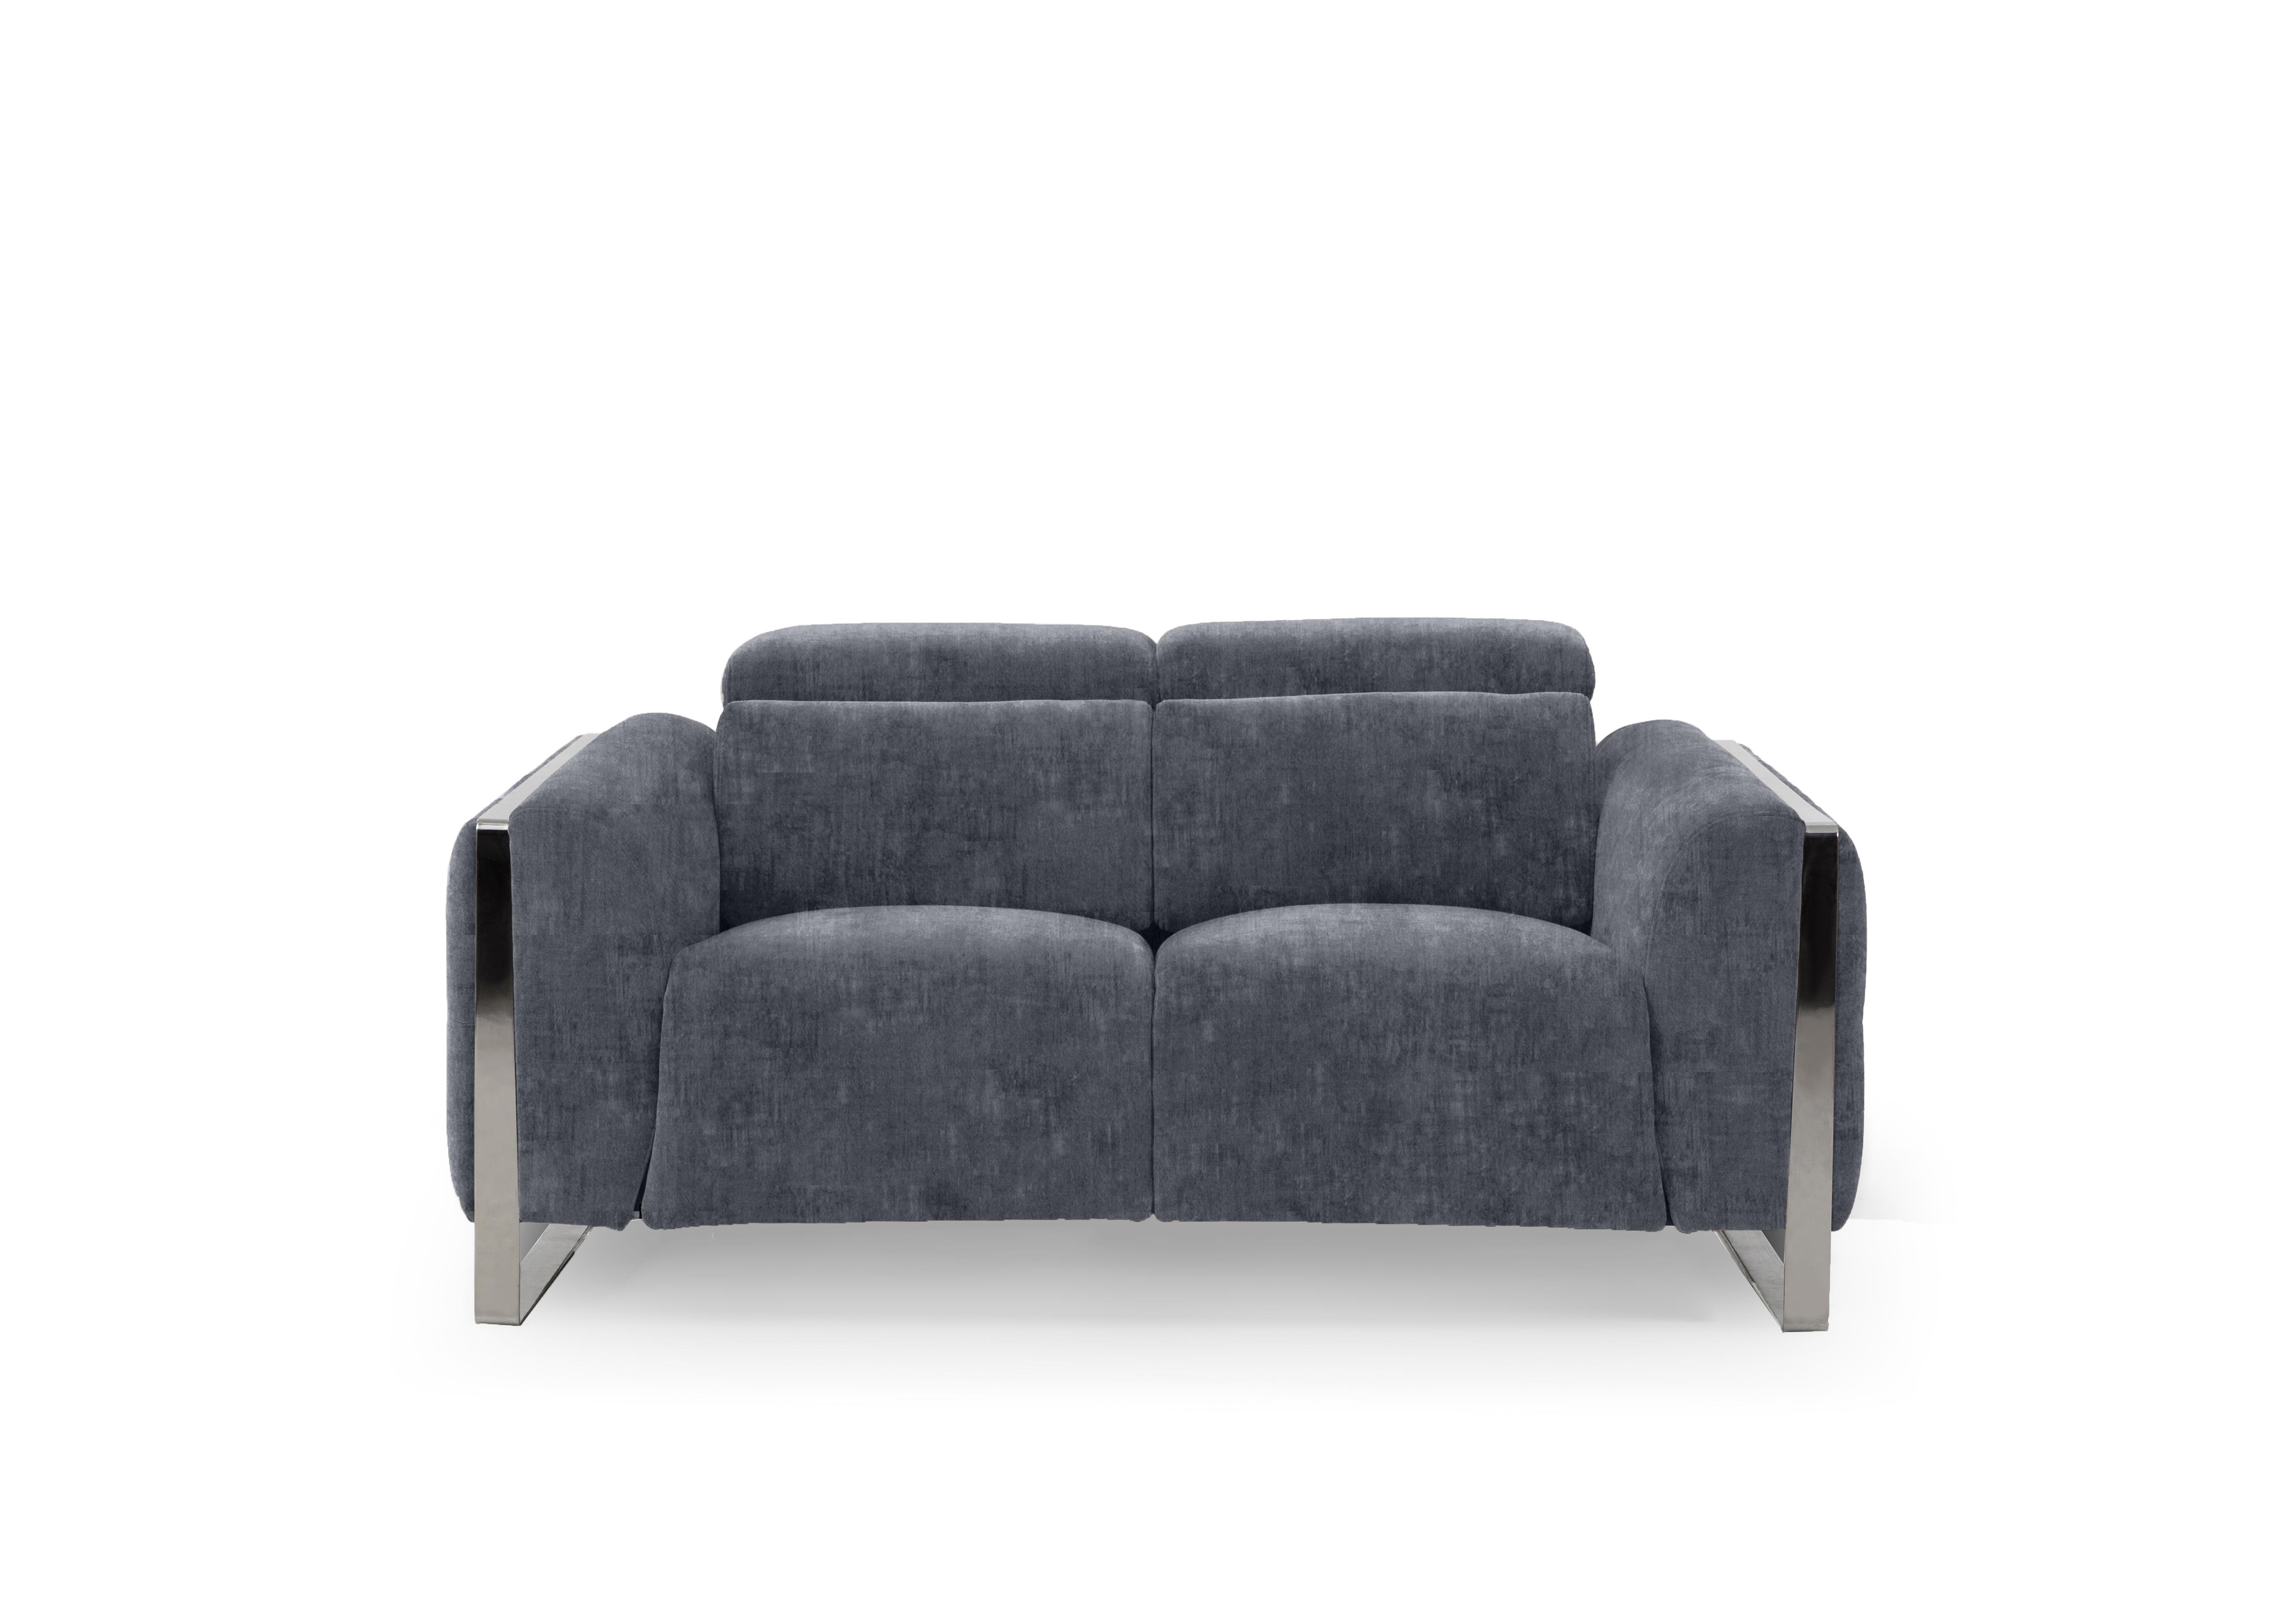 Gisella Fabric 2 Seater Sofa in Heritage Granite 52001 on Furniture Village